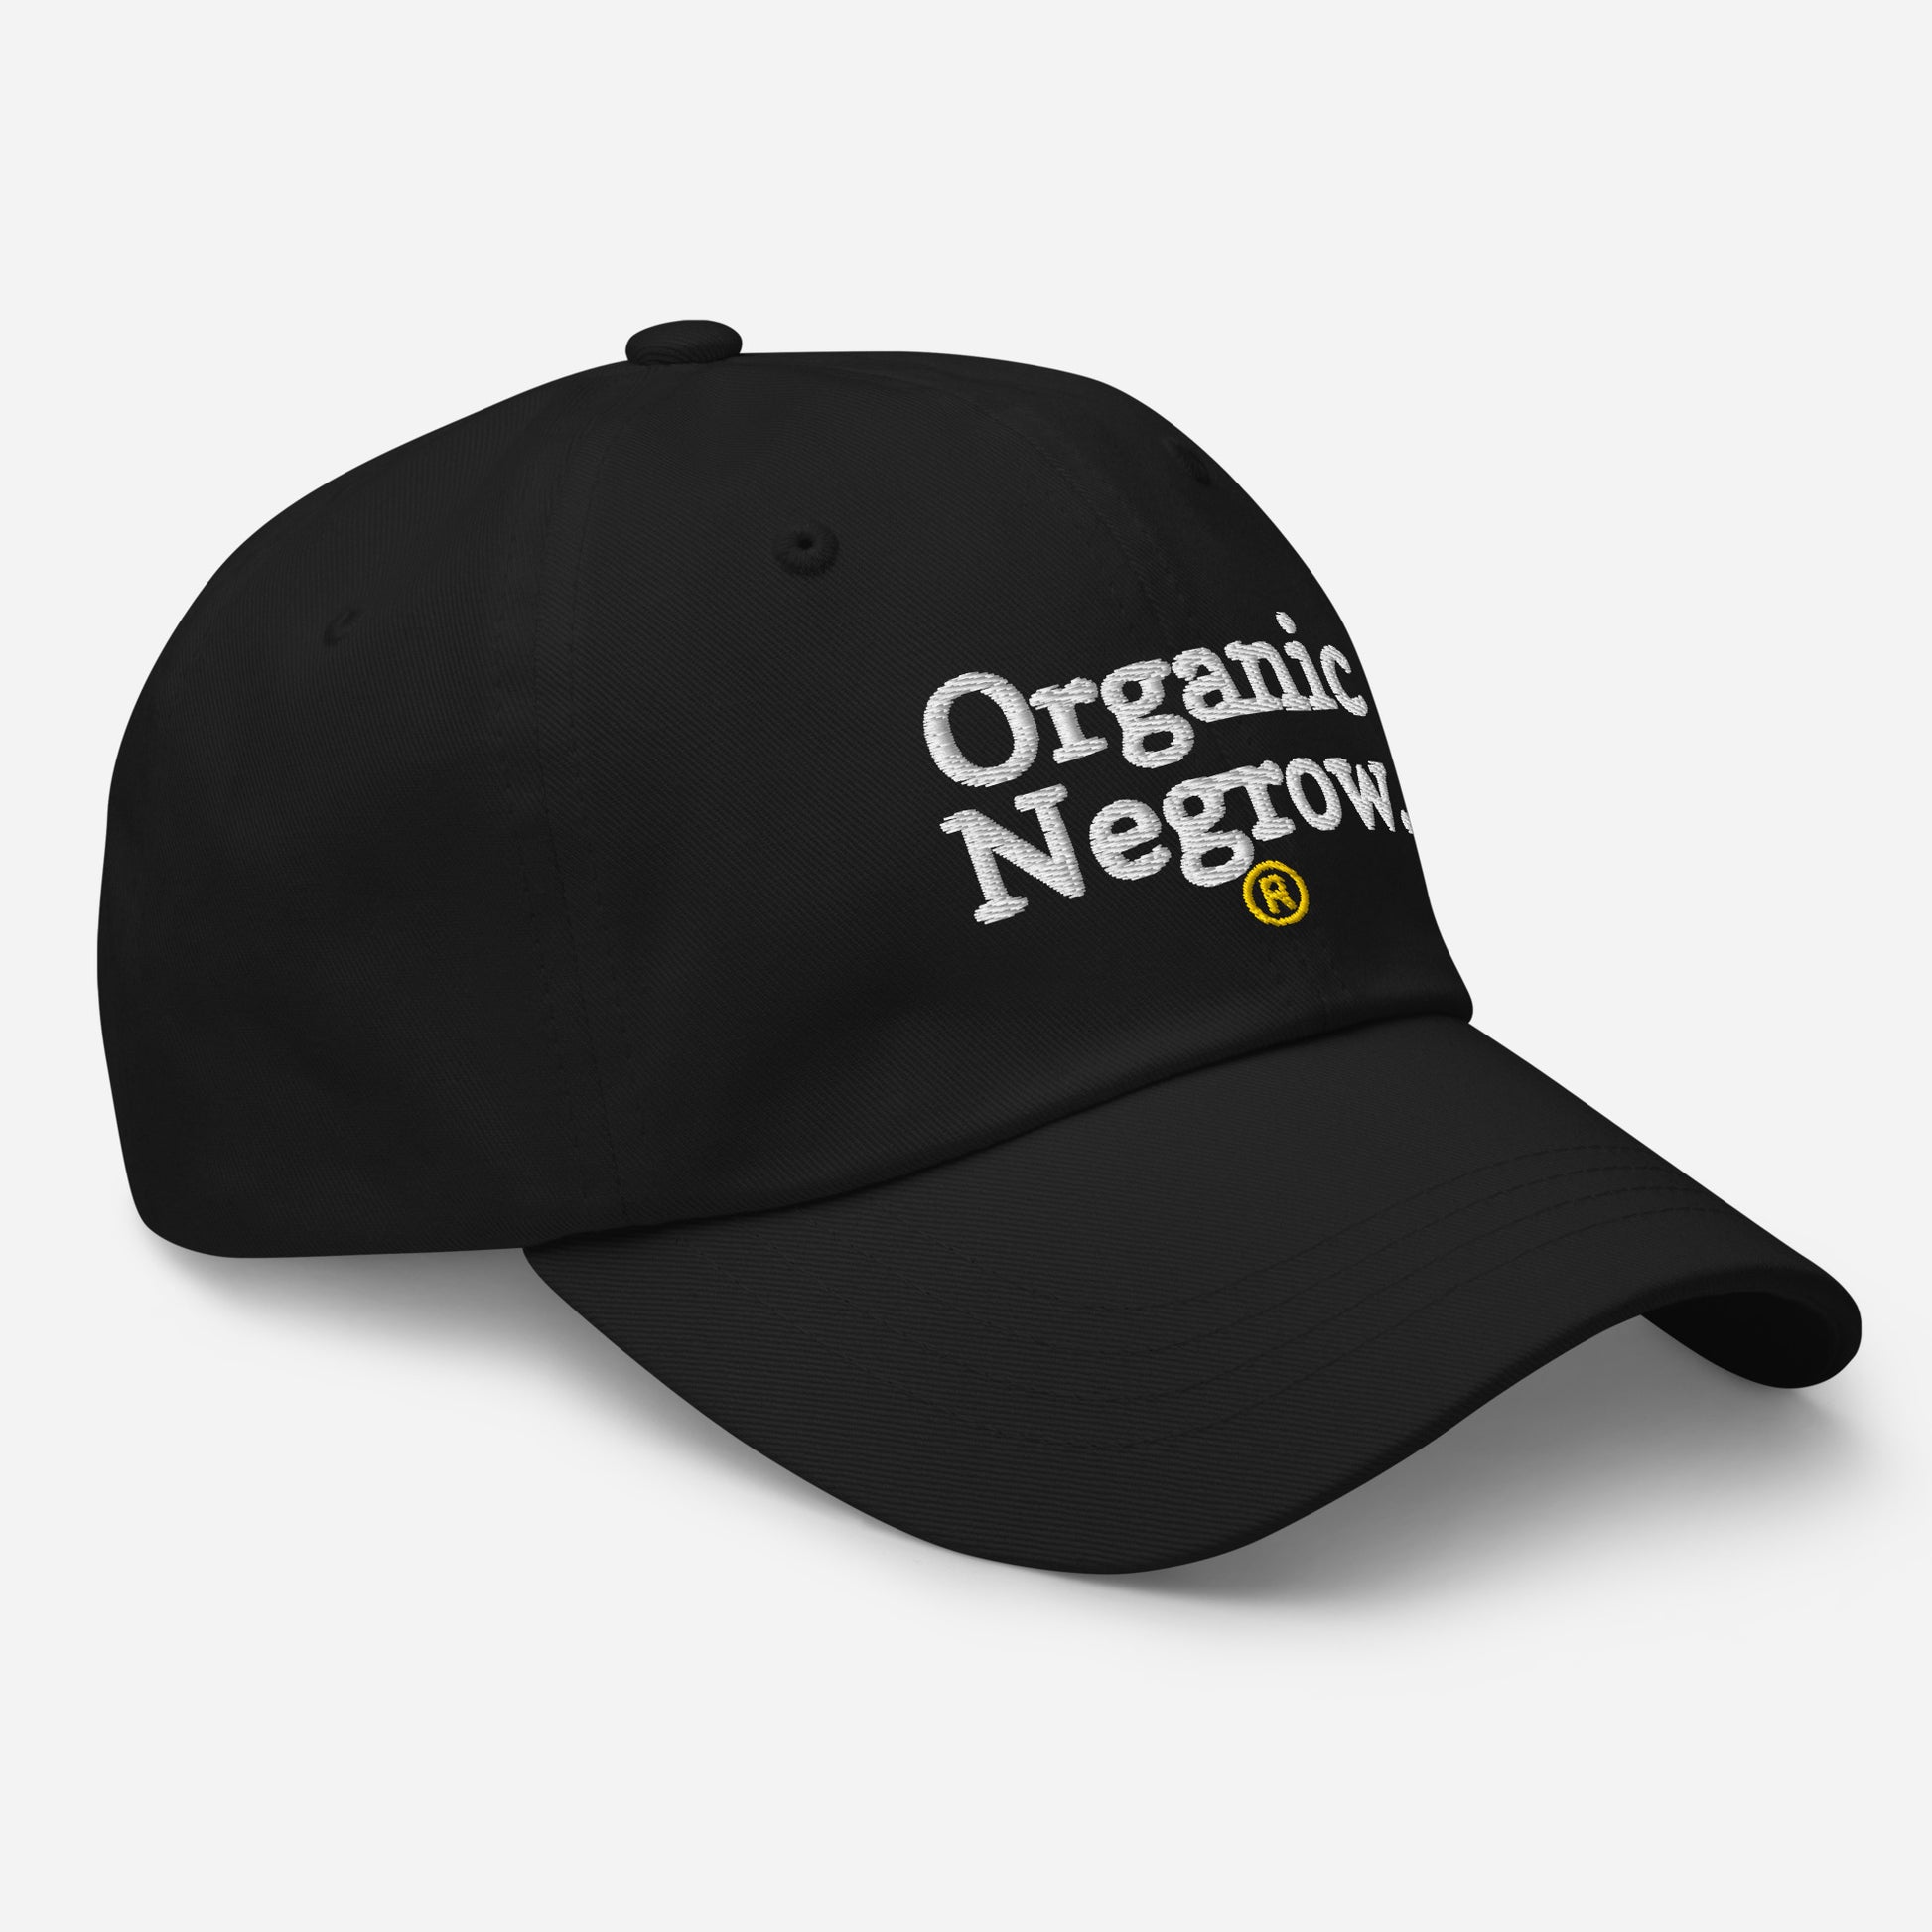 Organic Negrow Hat / Kyrie Irving Hat / Organic Negrow Dad hat